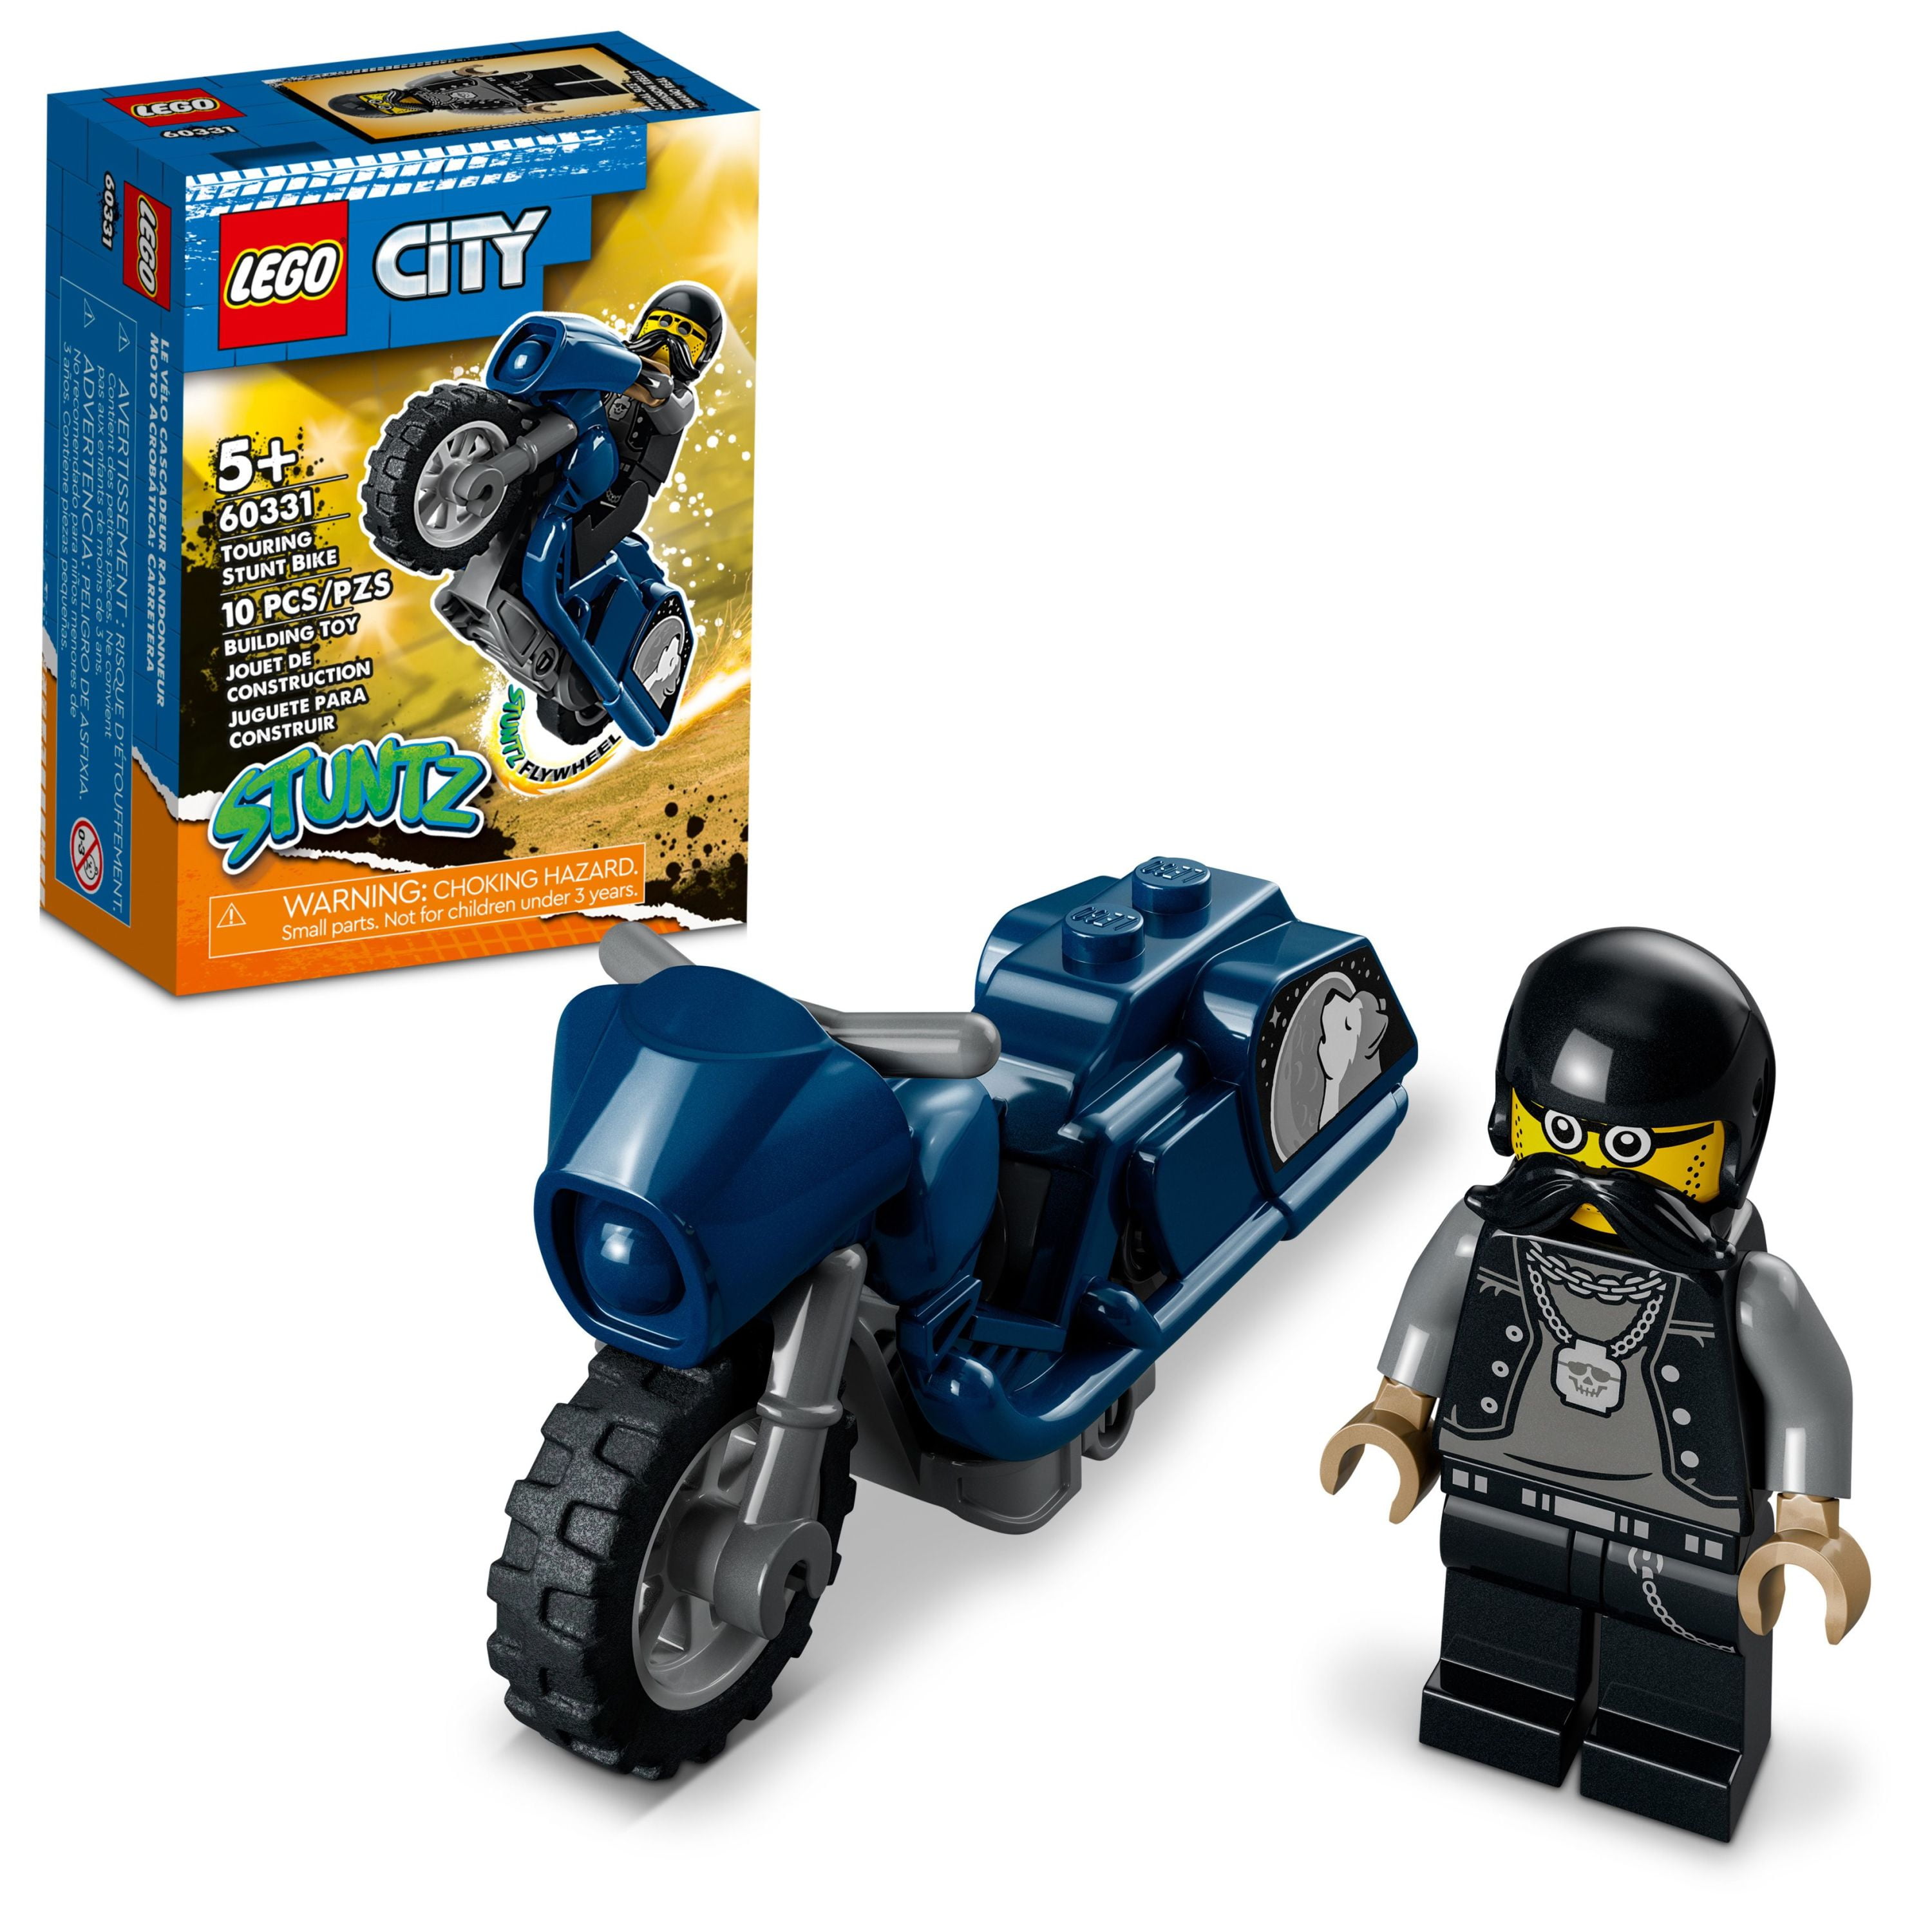 LEGO City Touring Stunt Bike 60331 Building Set (10 Pieces)